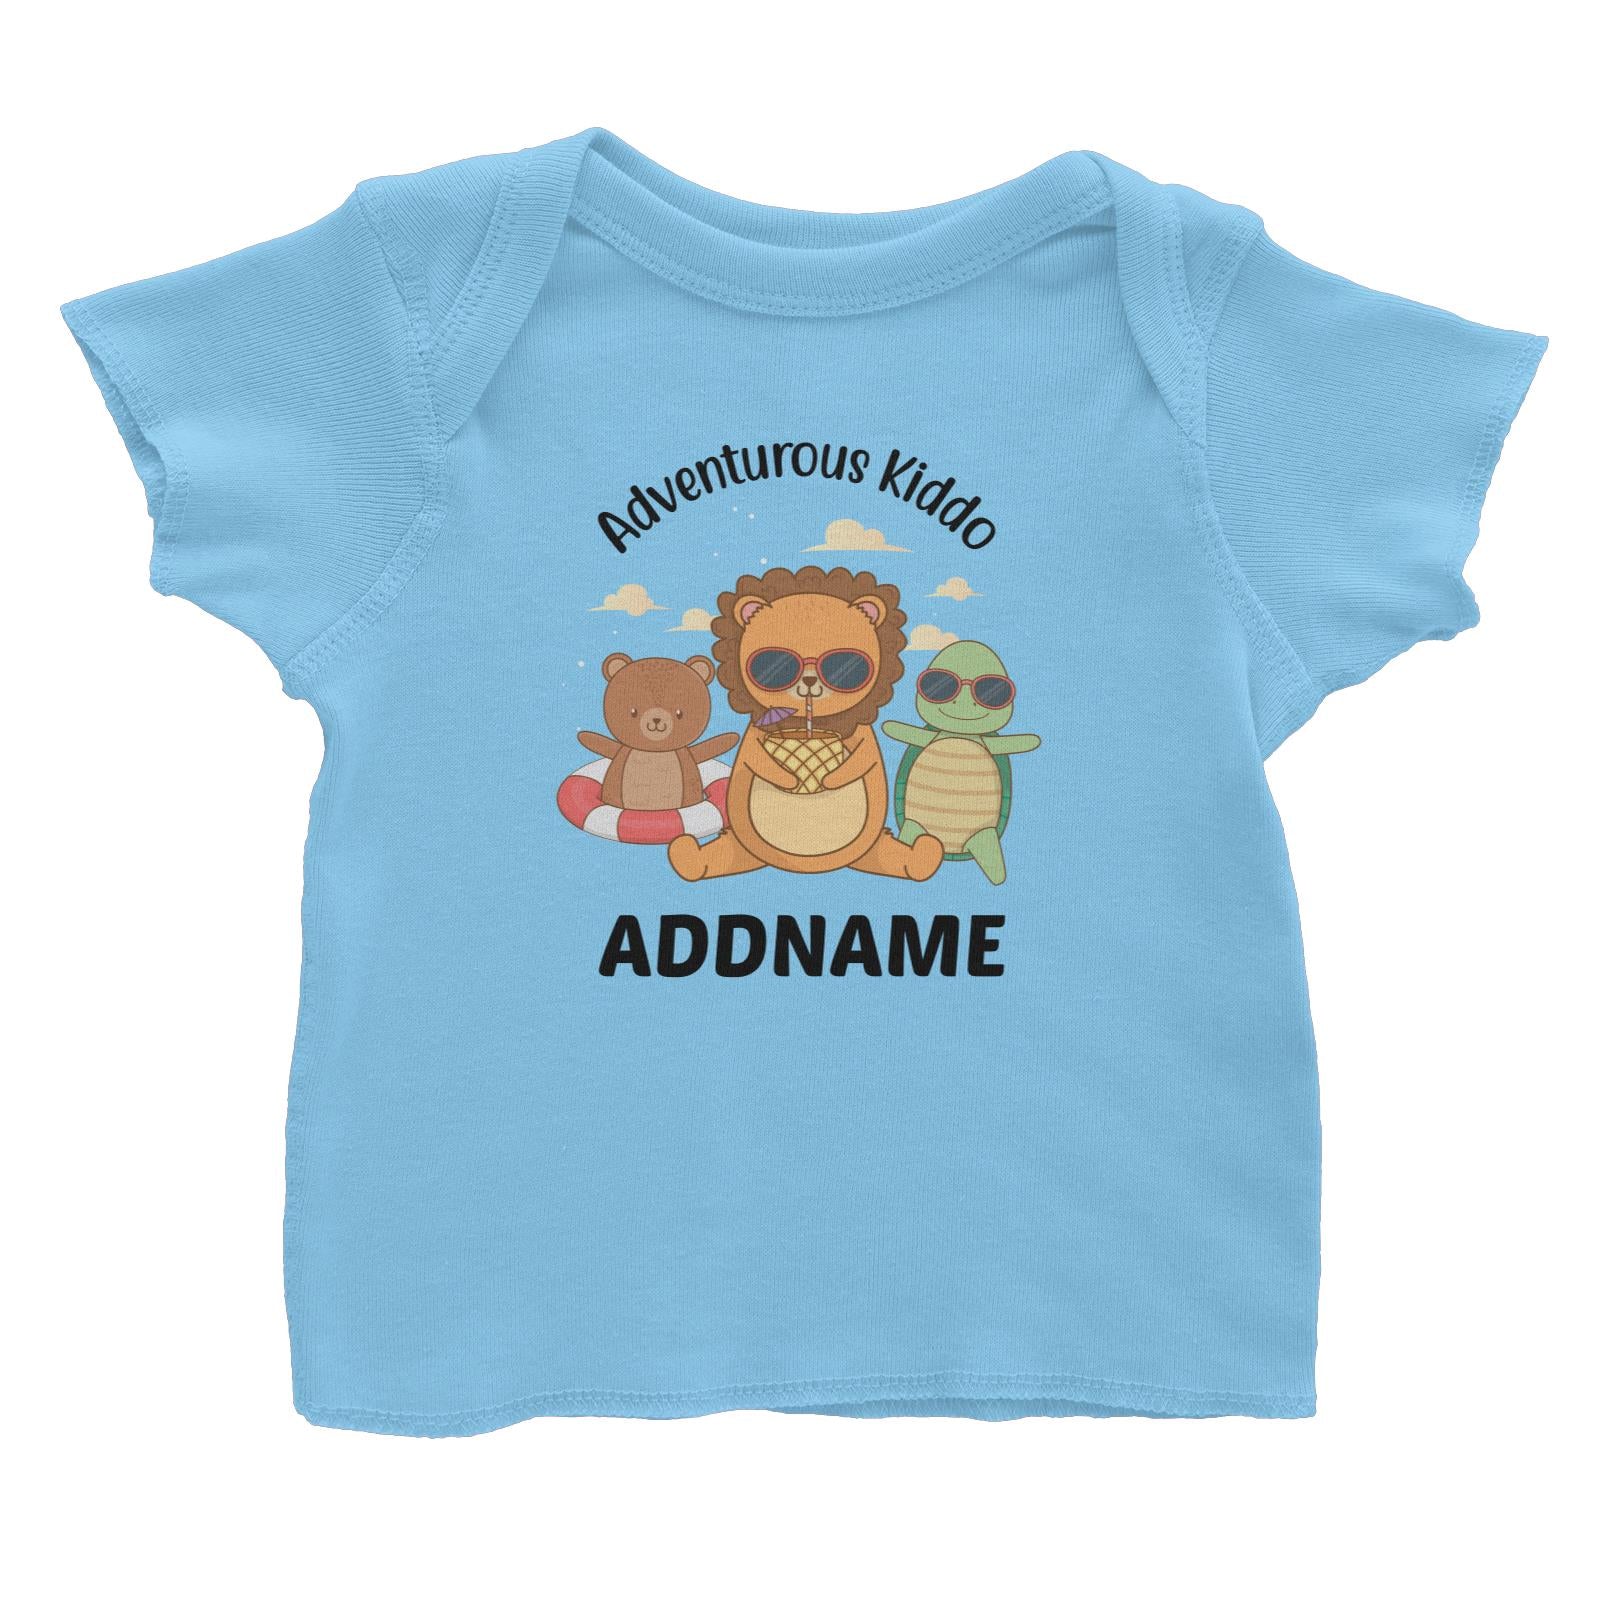 Adventurous Kiddo Addname Baby T-Shirt